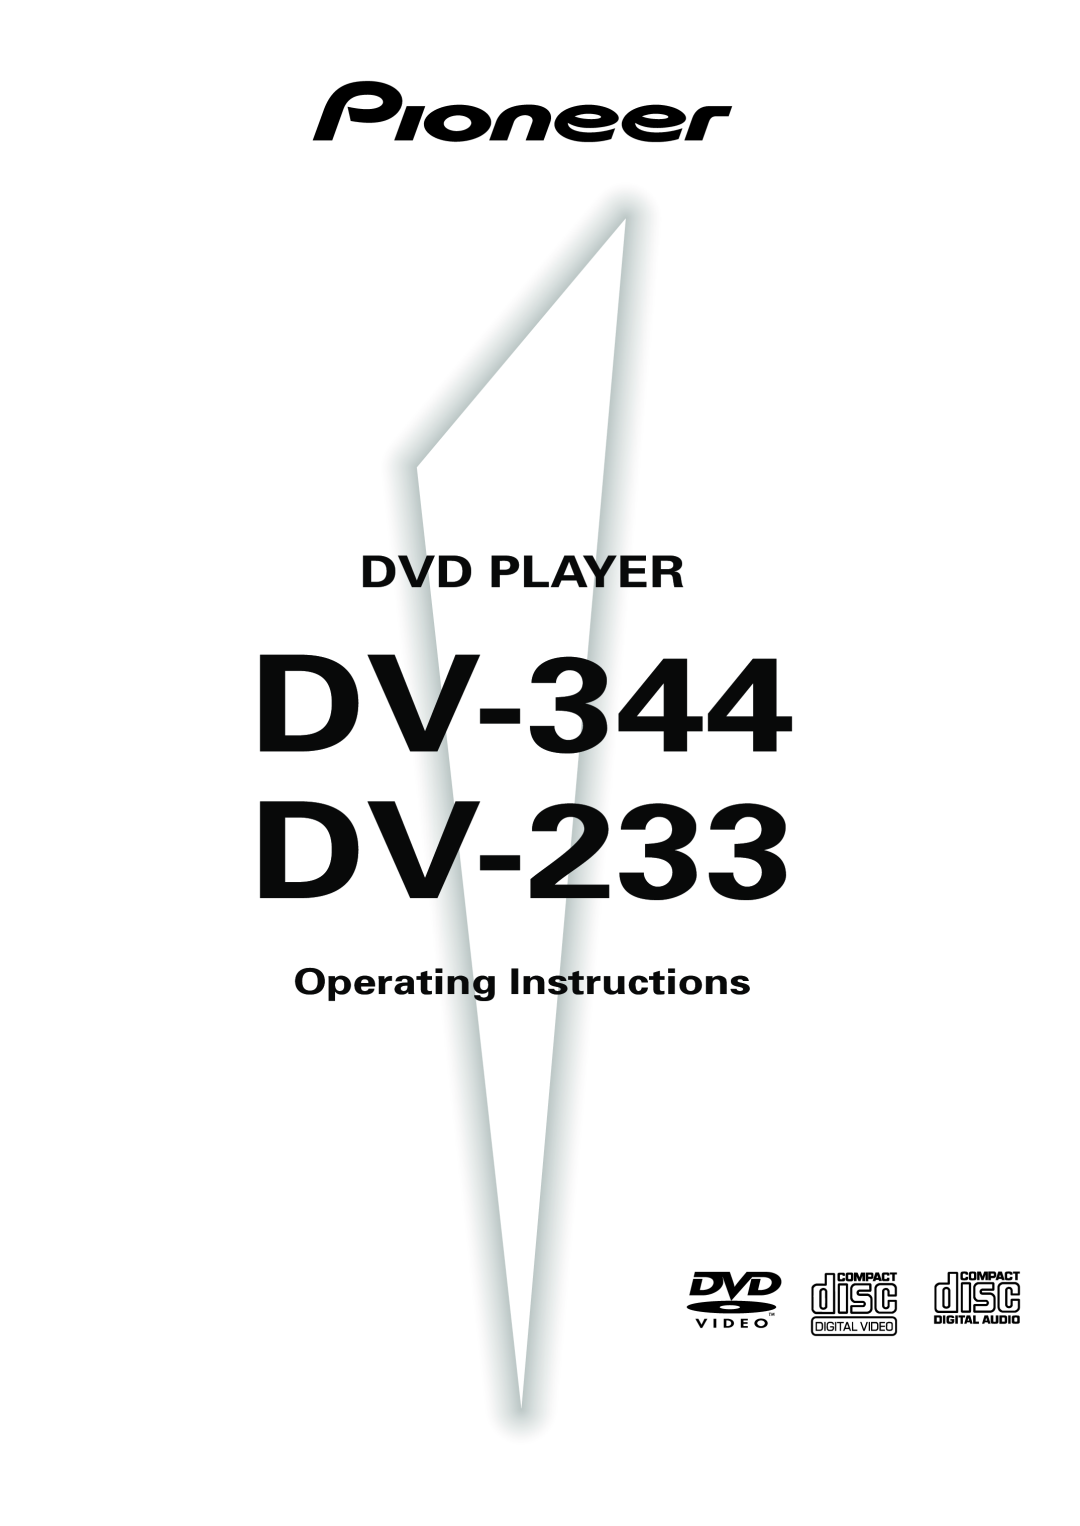 Pioneer operating instructions DV-344 DV-233, Dvd Player, Operating Instructions 